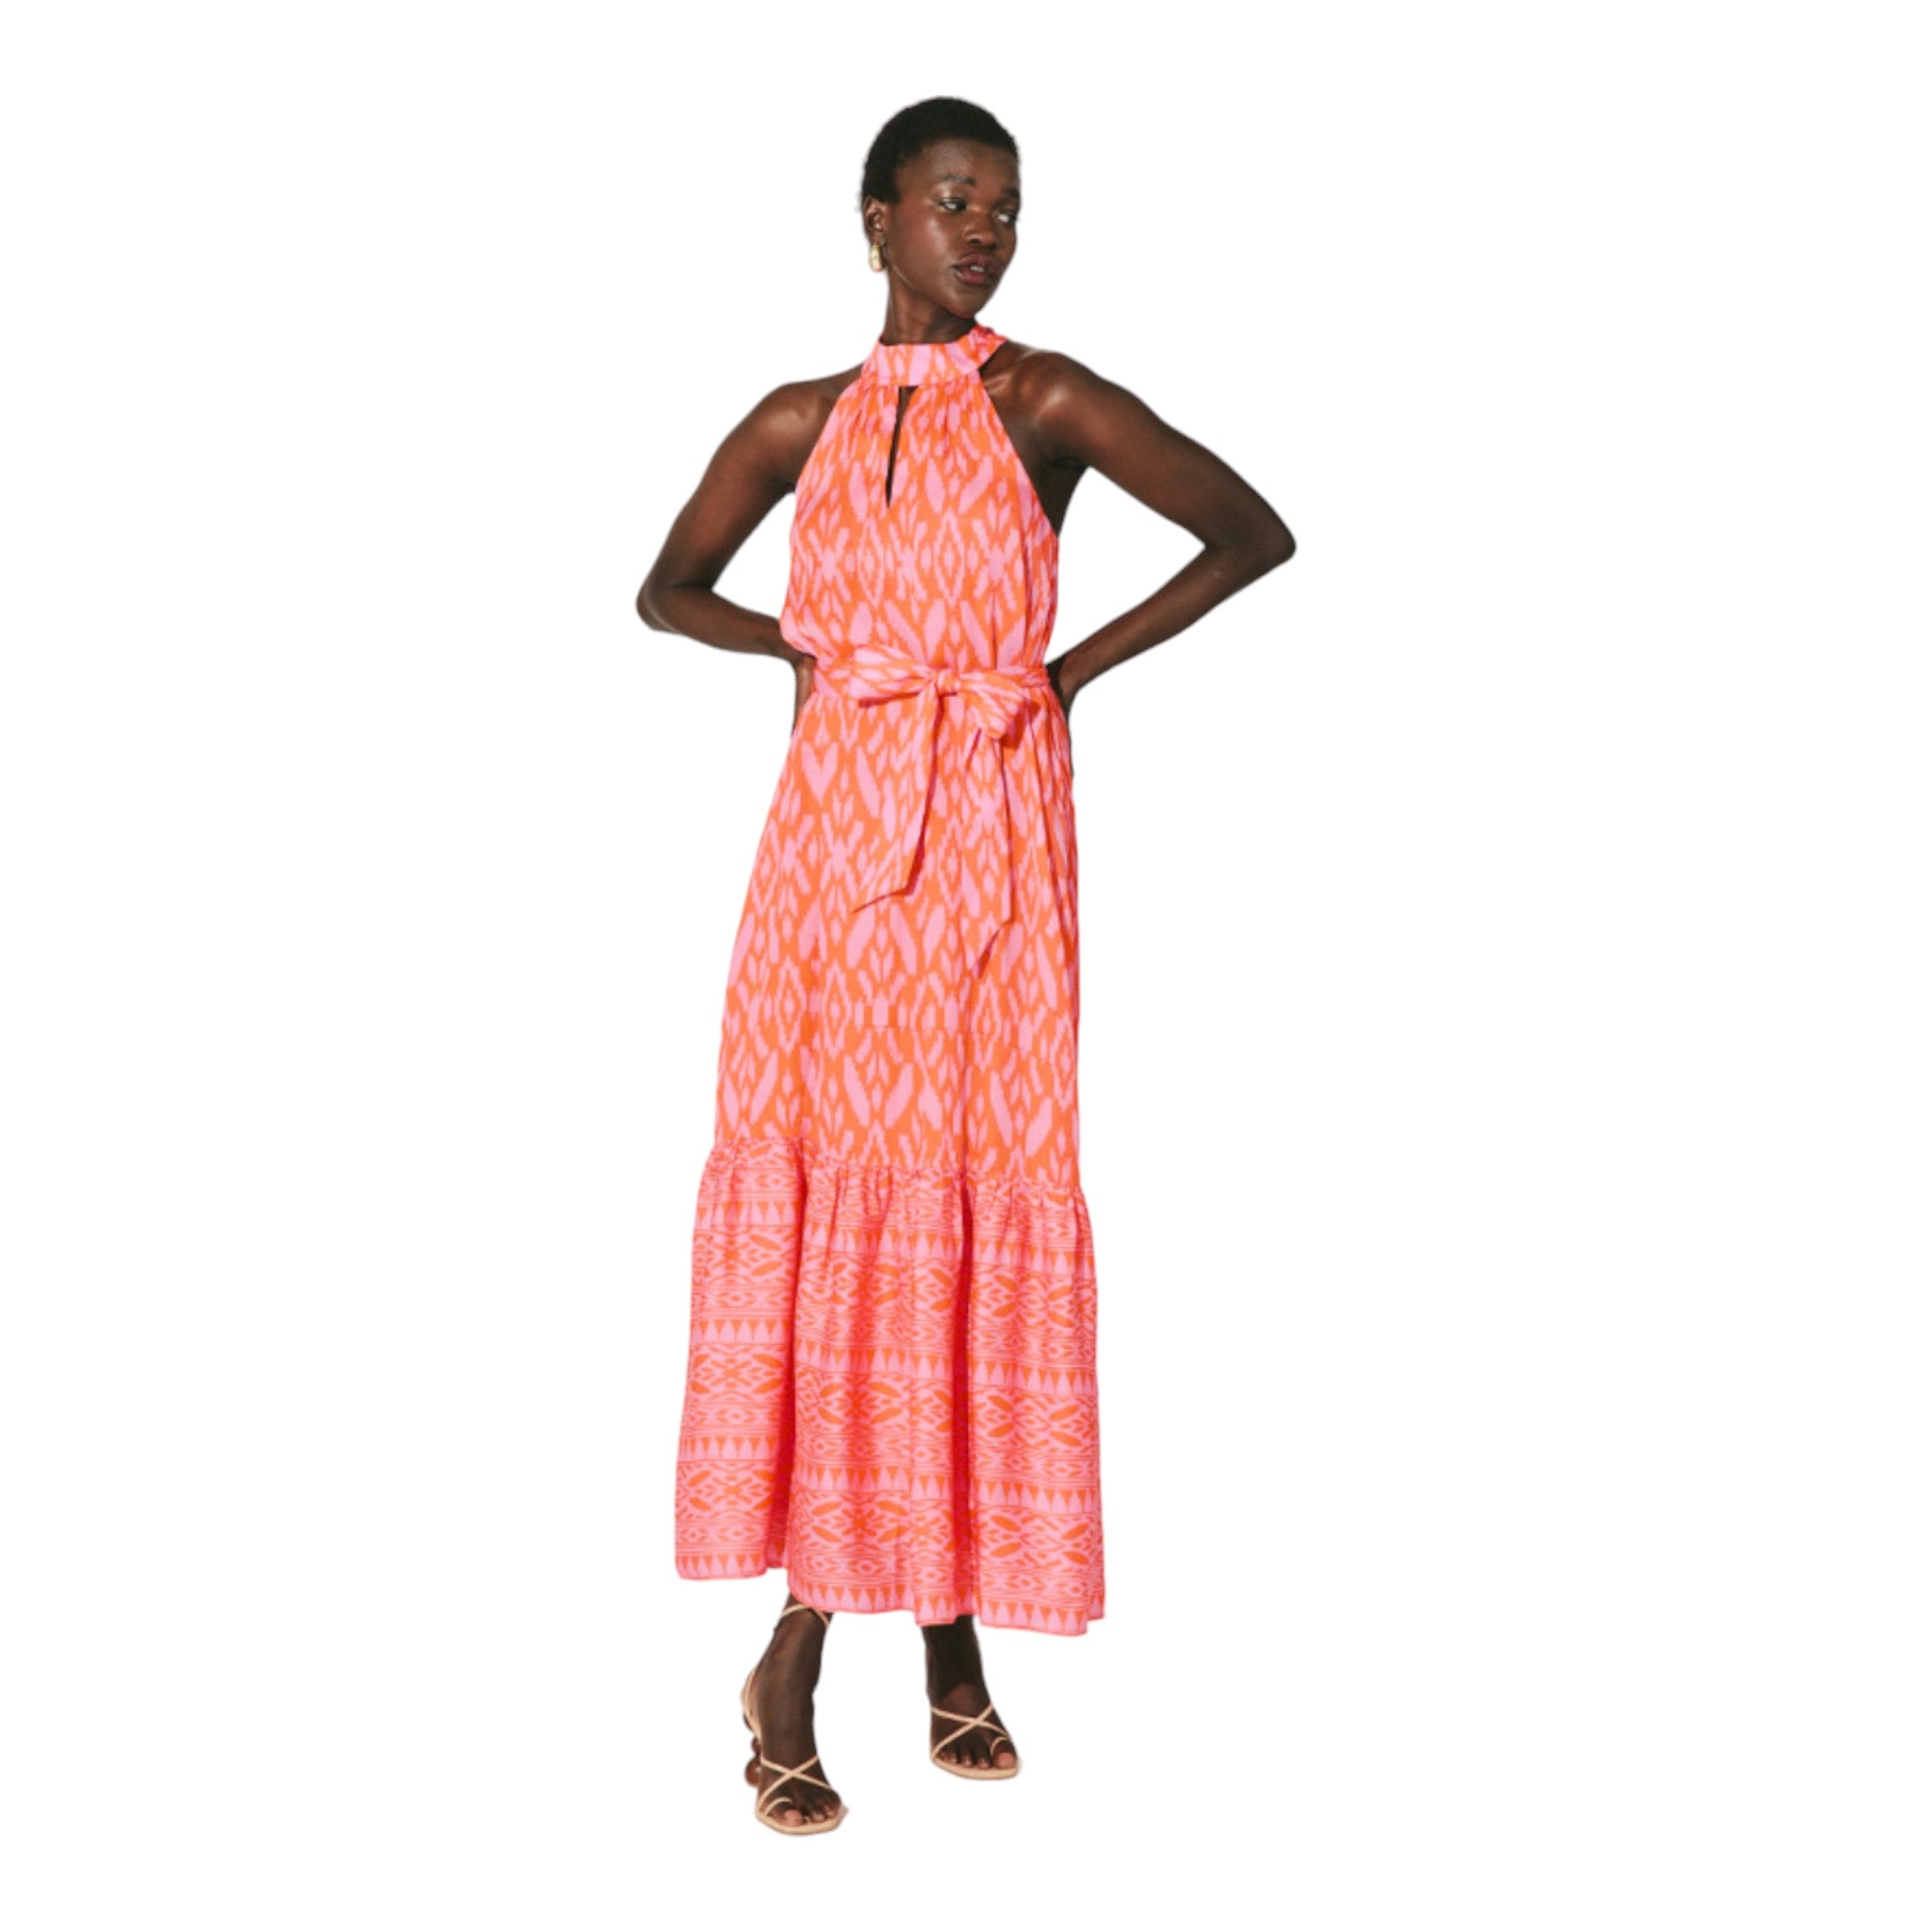 Cleobella - Janice Ankle Dress - Jaipur Ikat Print